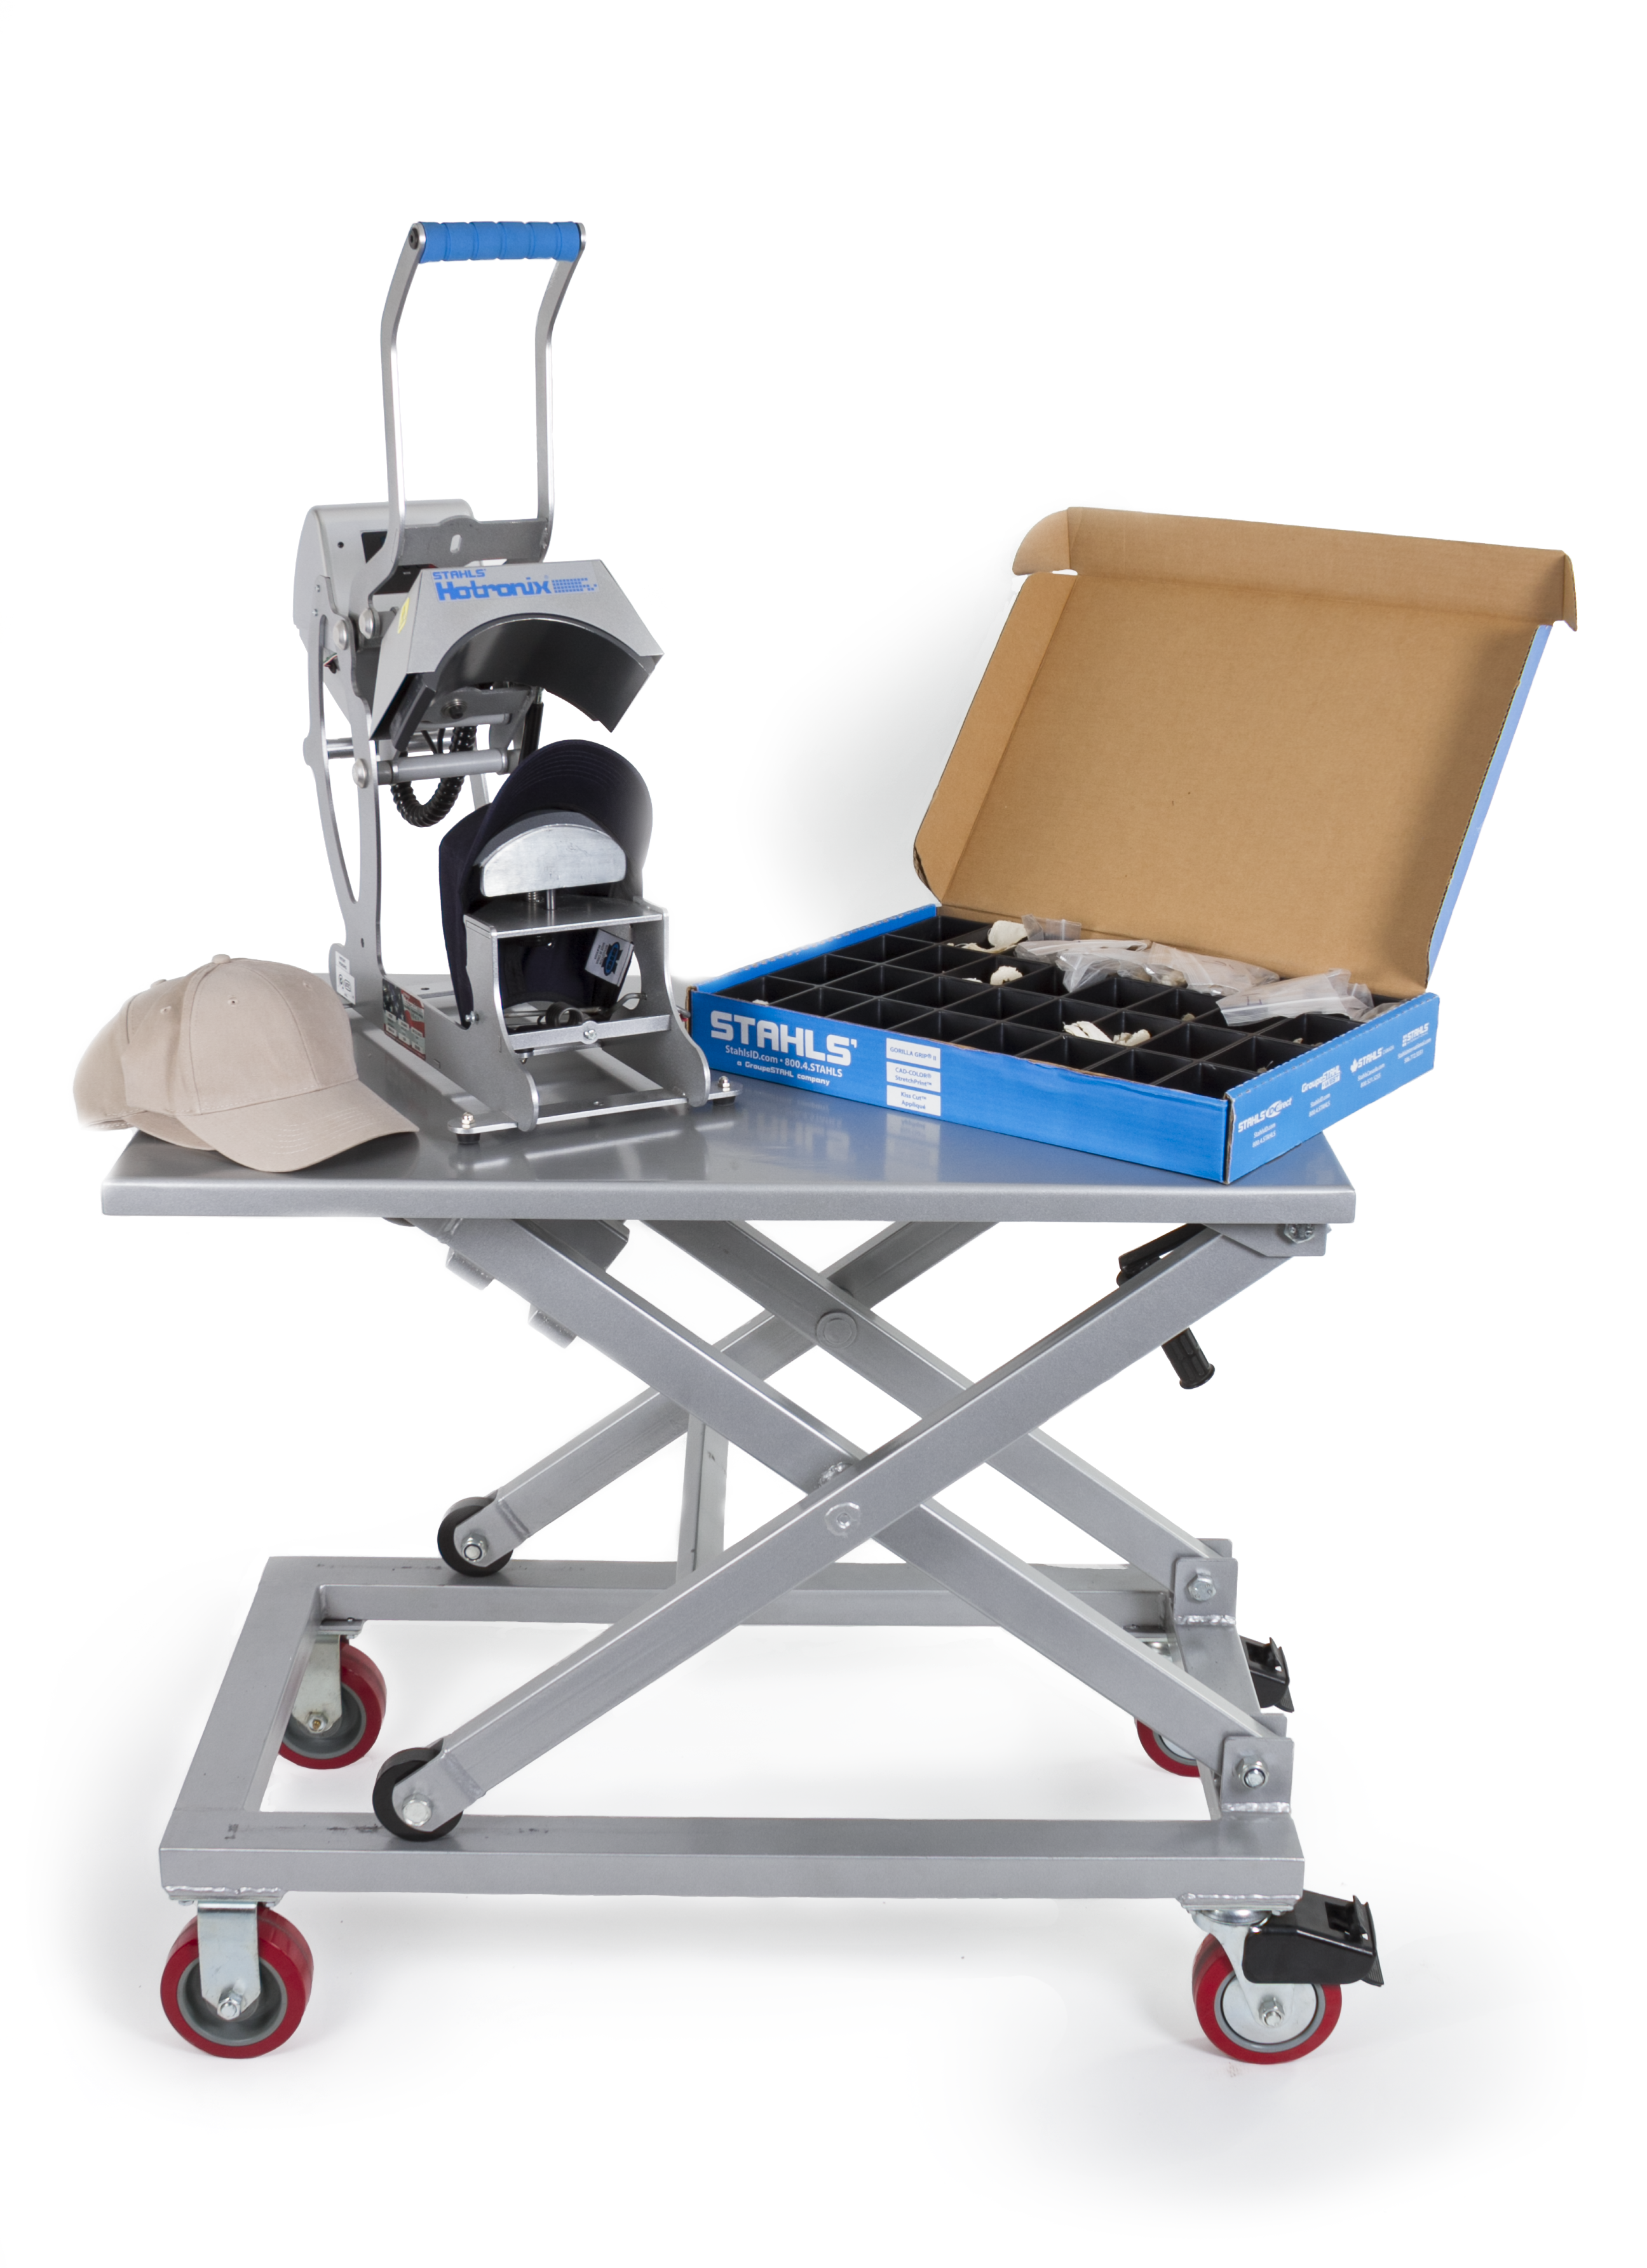 Hotronix - Heat Printing Equipment Cart